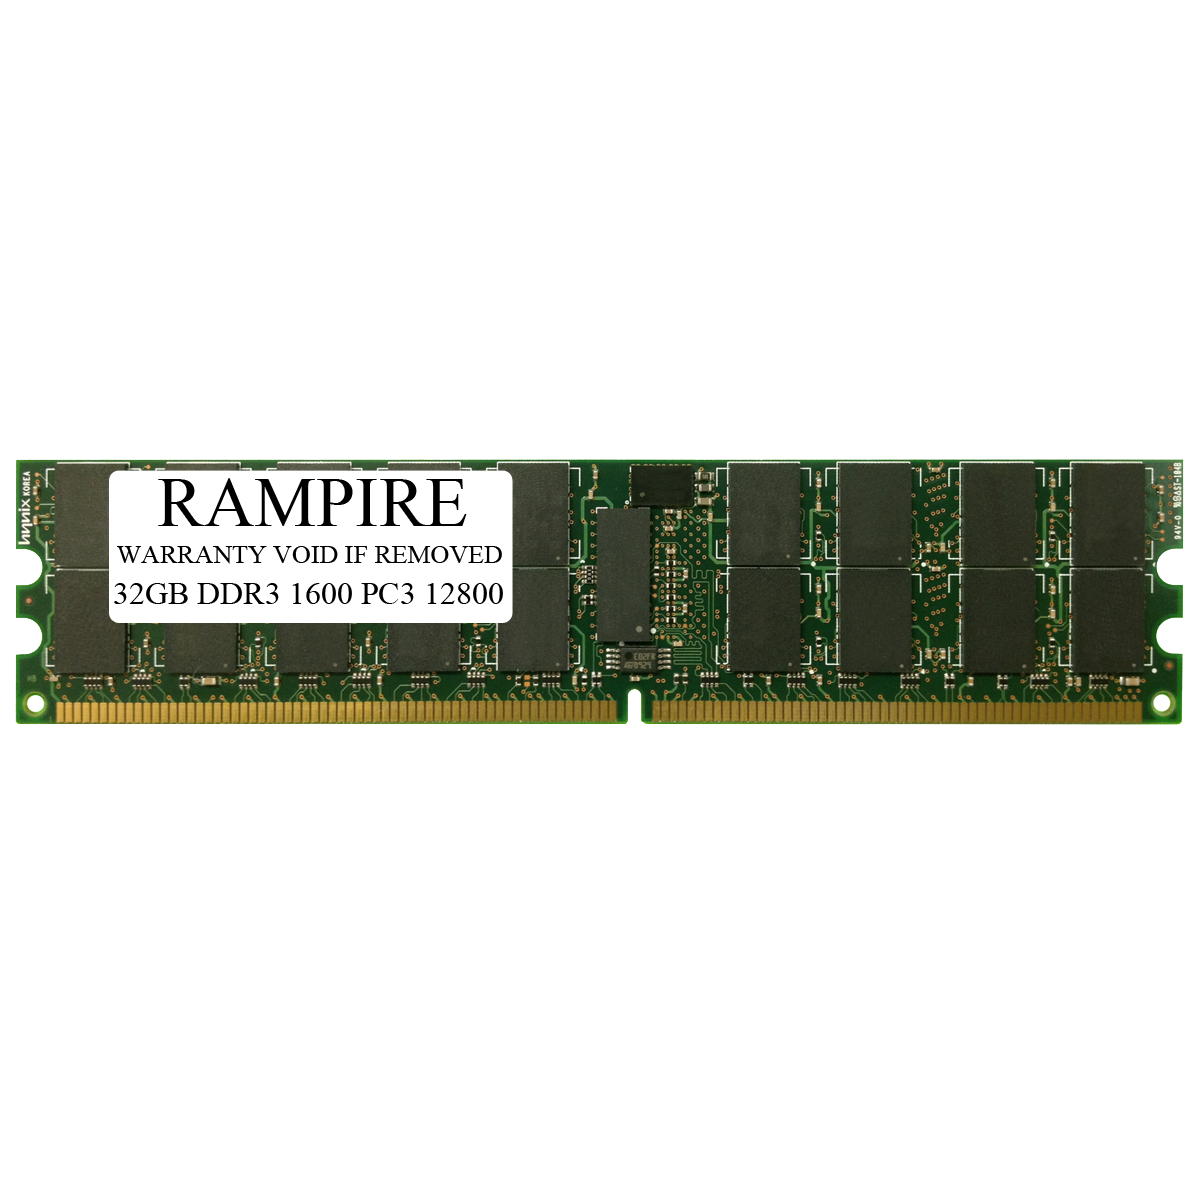 RAMPIRE 32GB DDR3 1600 (PC3 12800) 240-Pin SDRAM 4Rx4 Standard Profile 1.5V ECC Registered Server Memory